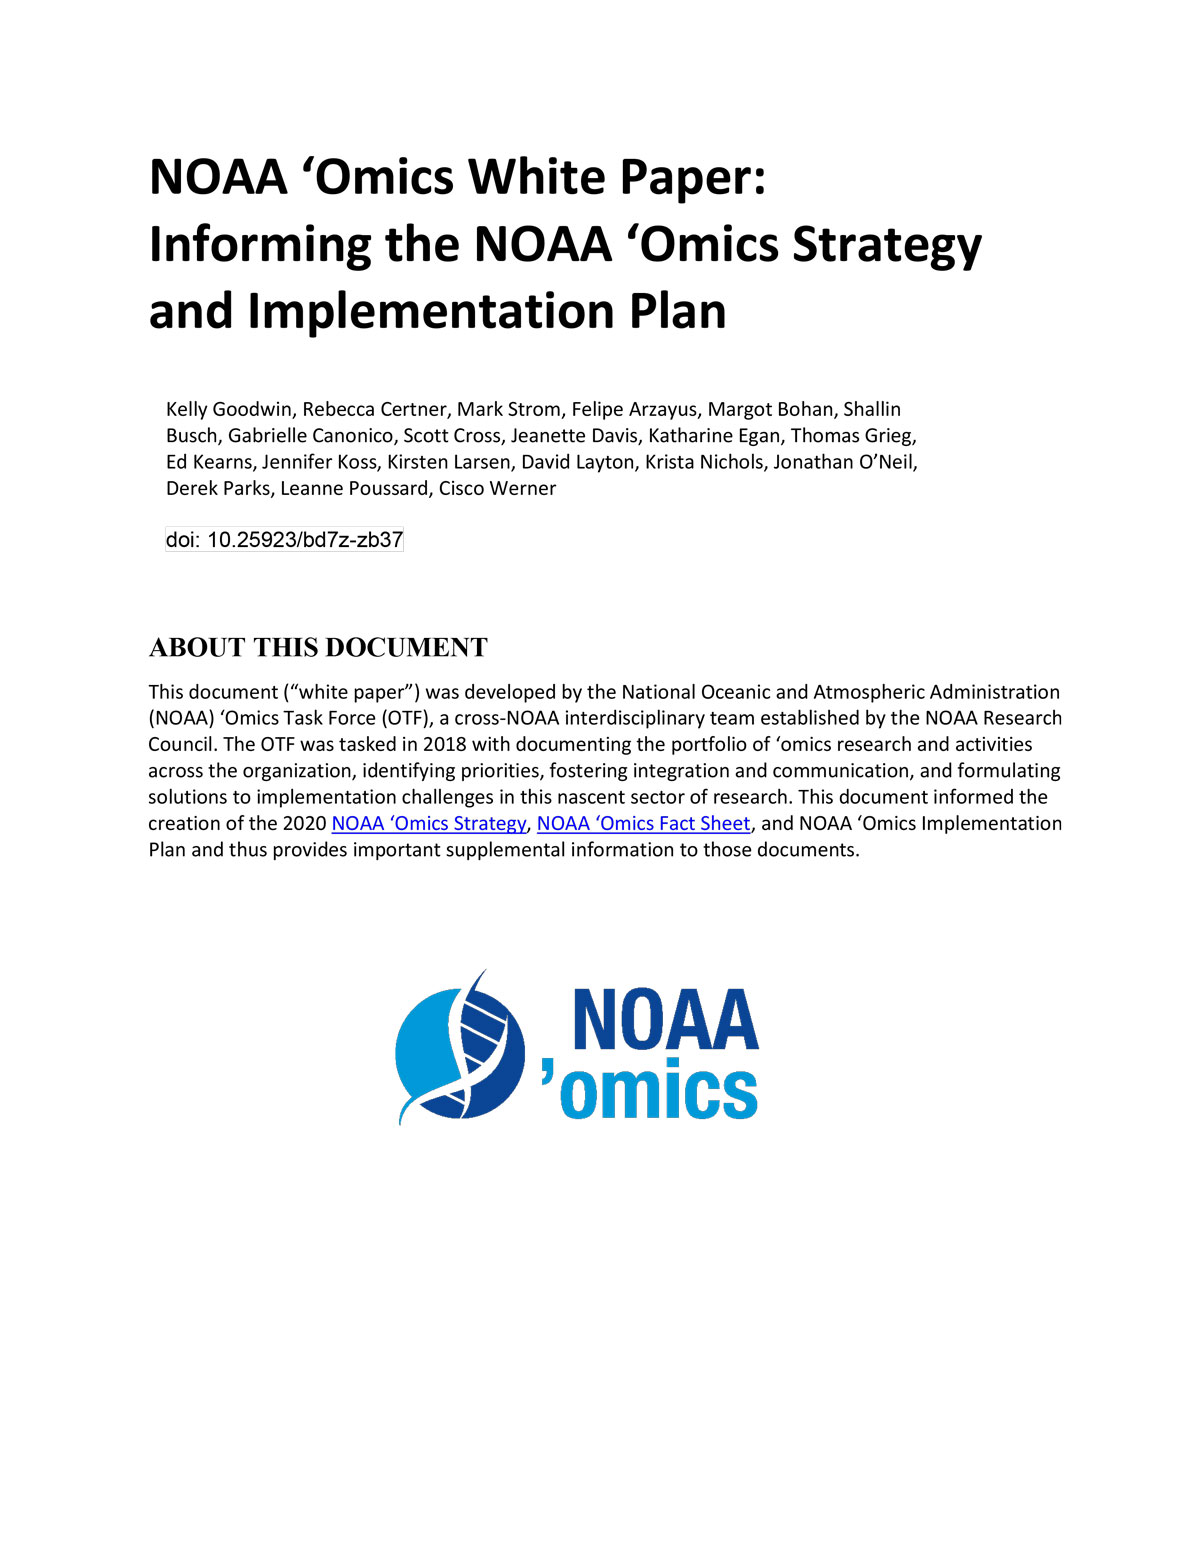 NOAA 'Omics White Paper button